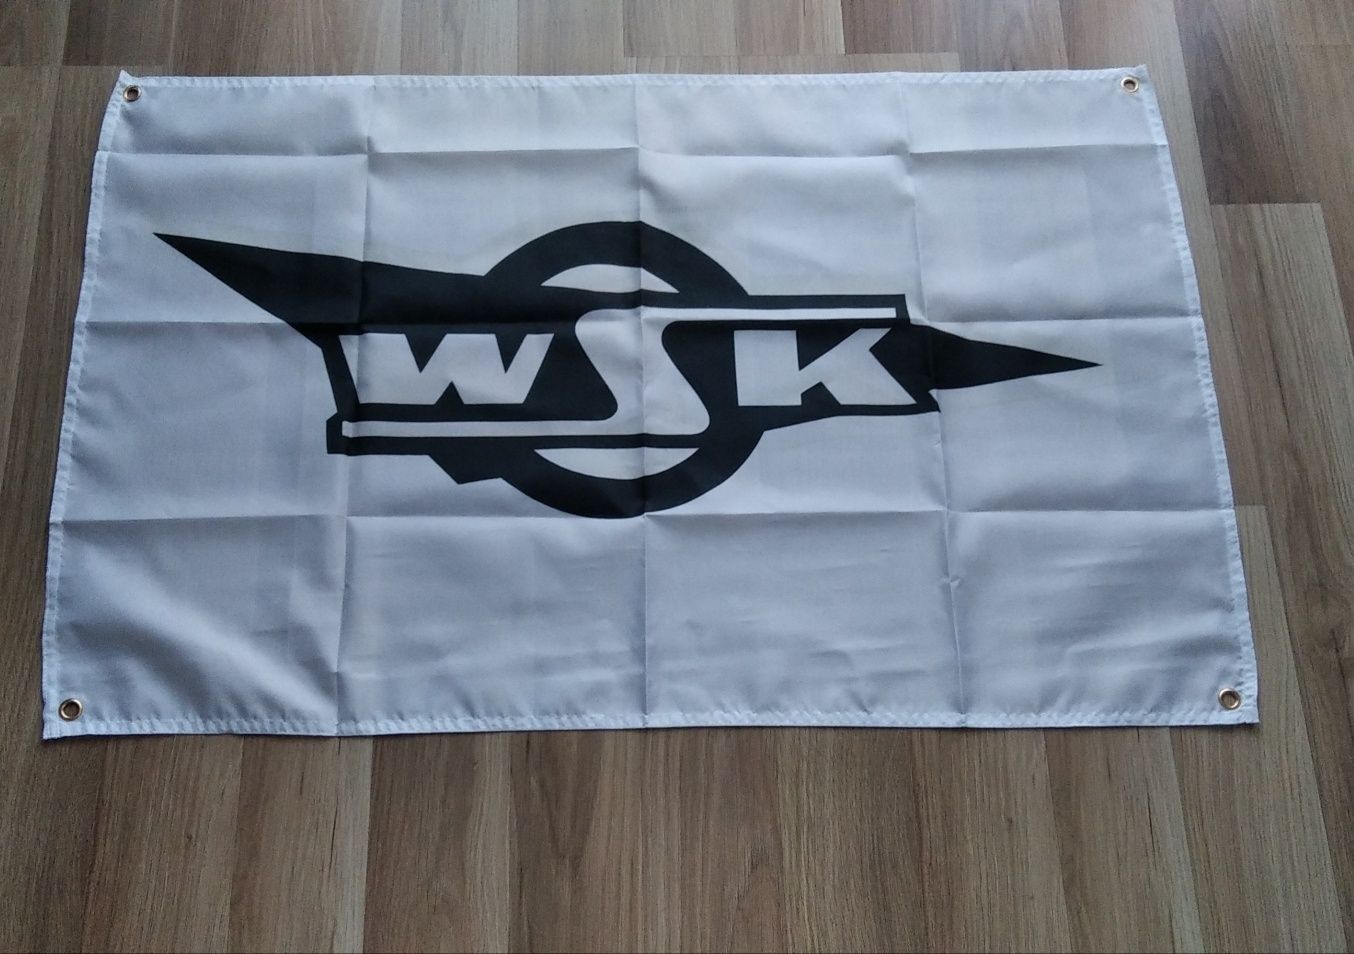 Banet plakat flaga materiał wsk modele  125 175 wsk retro 90x60cm